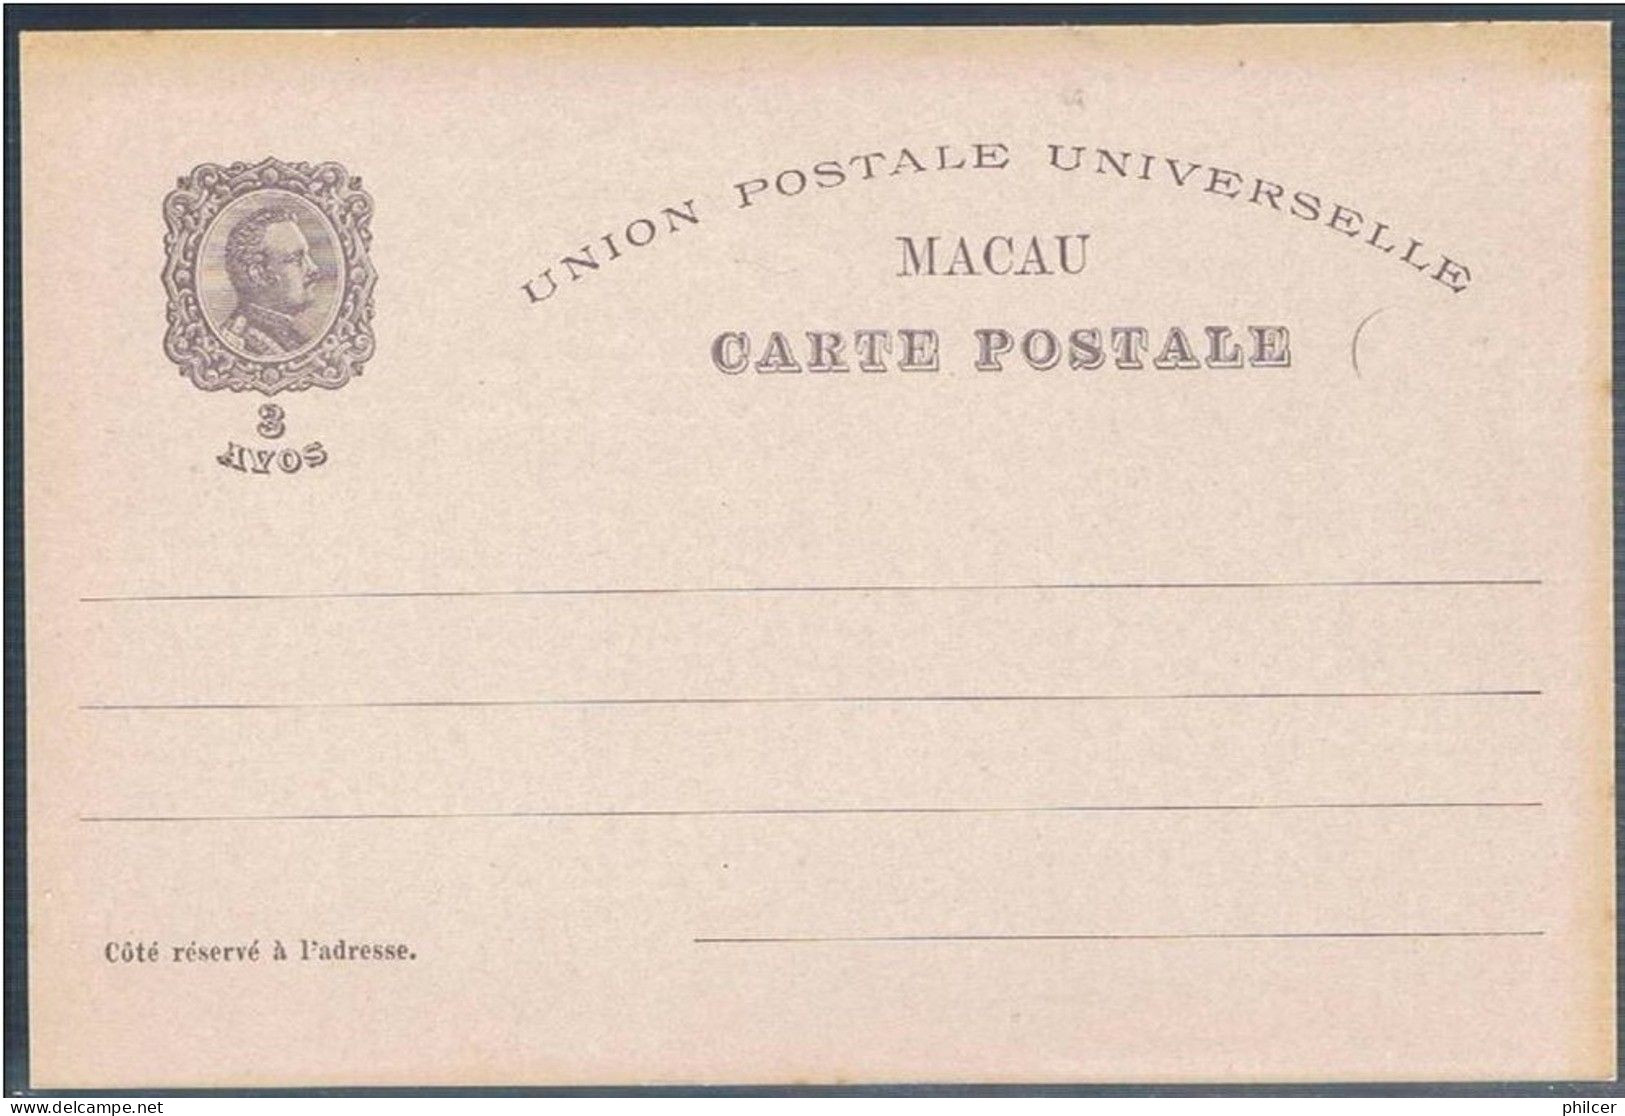 Macau, Bilhete Postal Sé De Lisboa - Covers & Documents